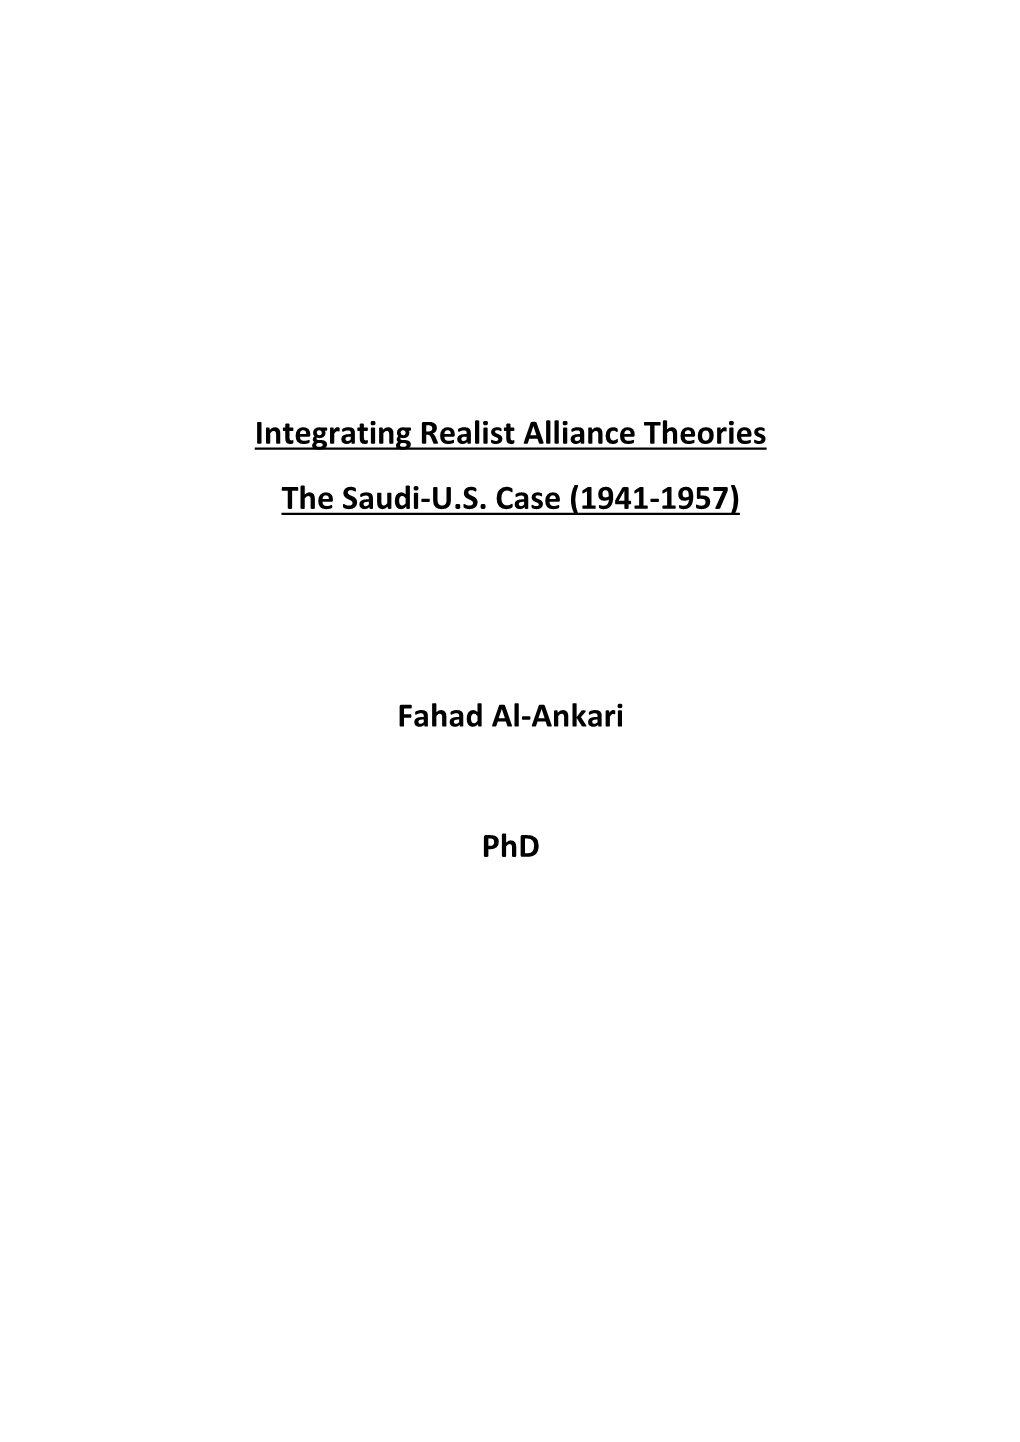 Integrating Realist Alliance Theories the Saudi-U.S. Case (1941-1957)